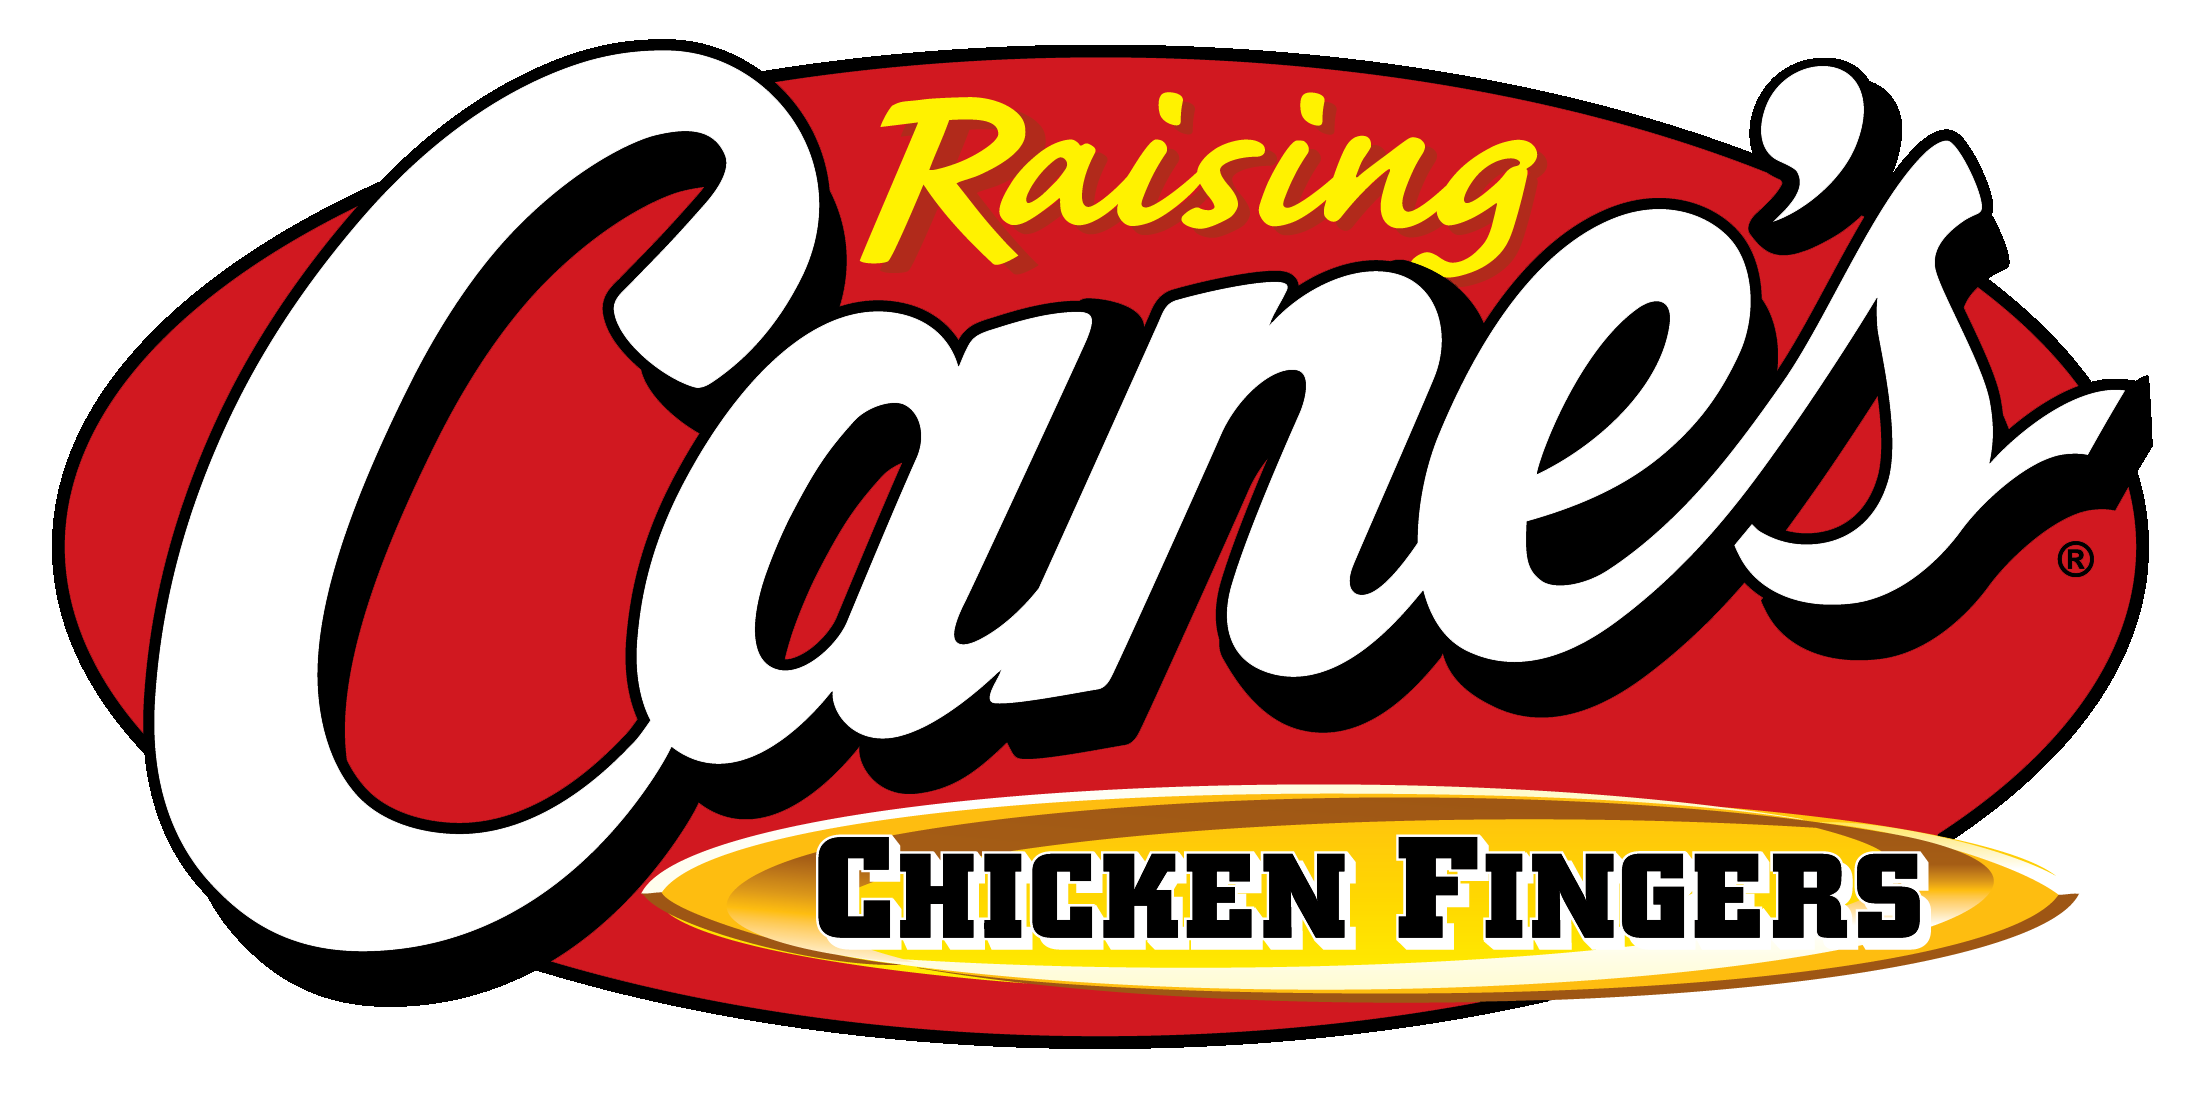 Raising Canes Logo.png